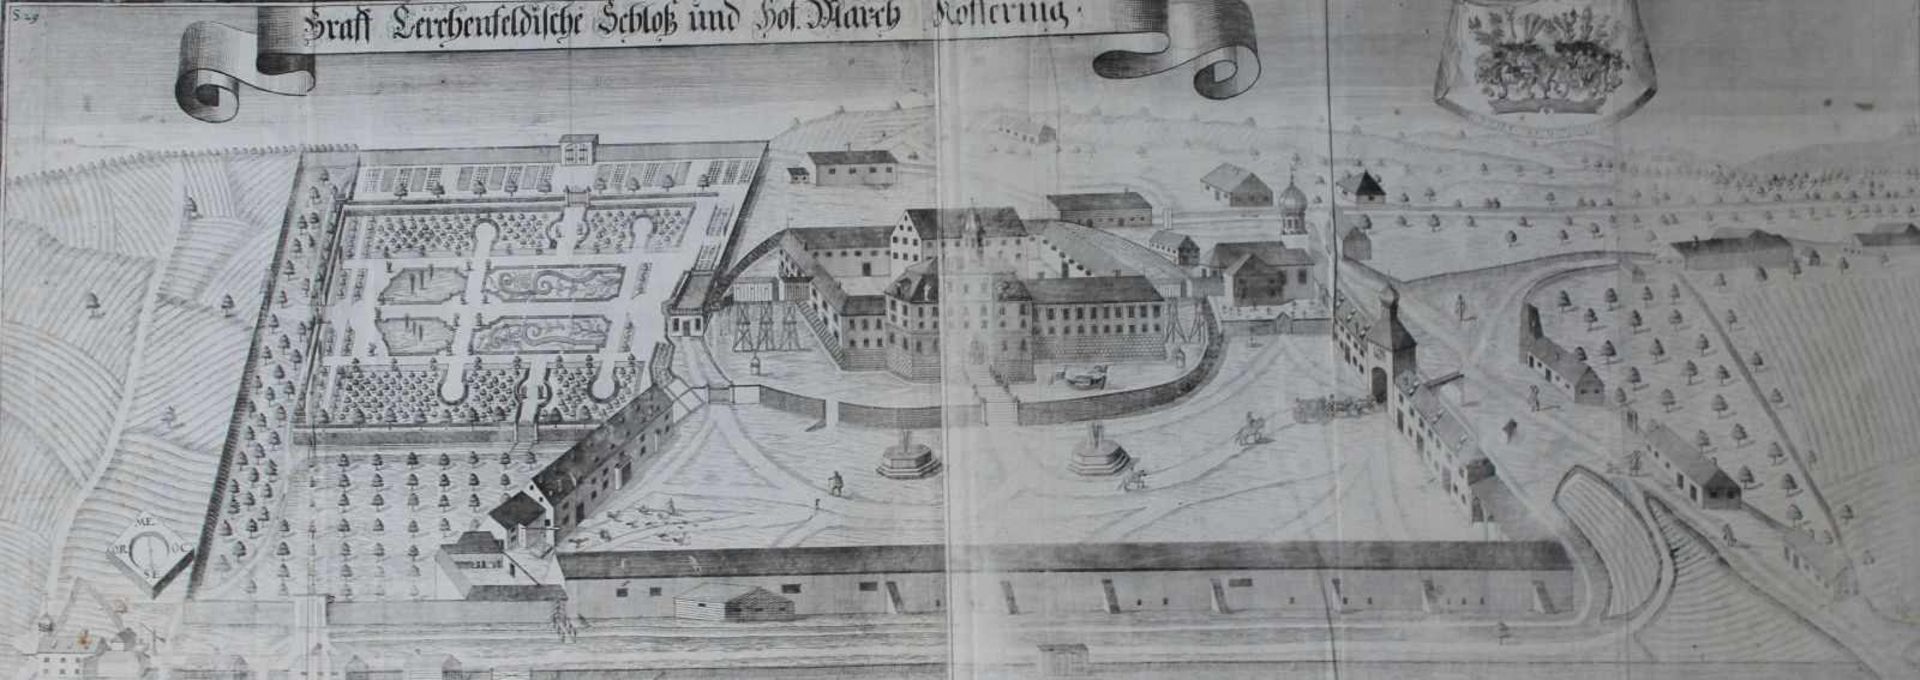 Großer Kupferstich - Michael Wening (1645 Nürnberg - 1718 München) "Schloß Köfering", 18.